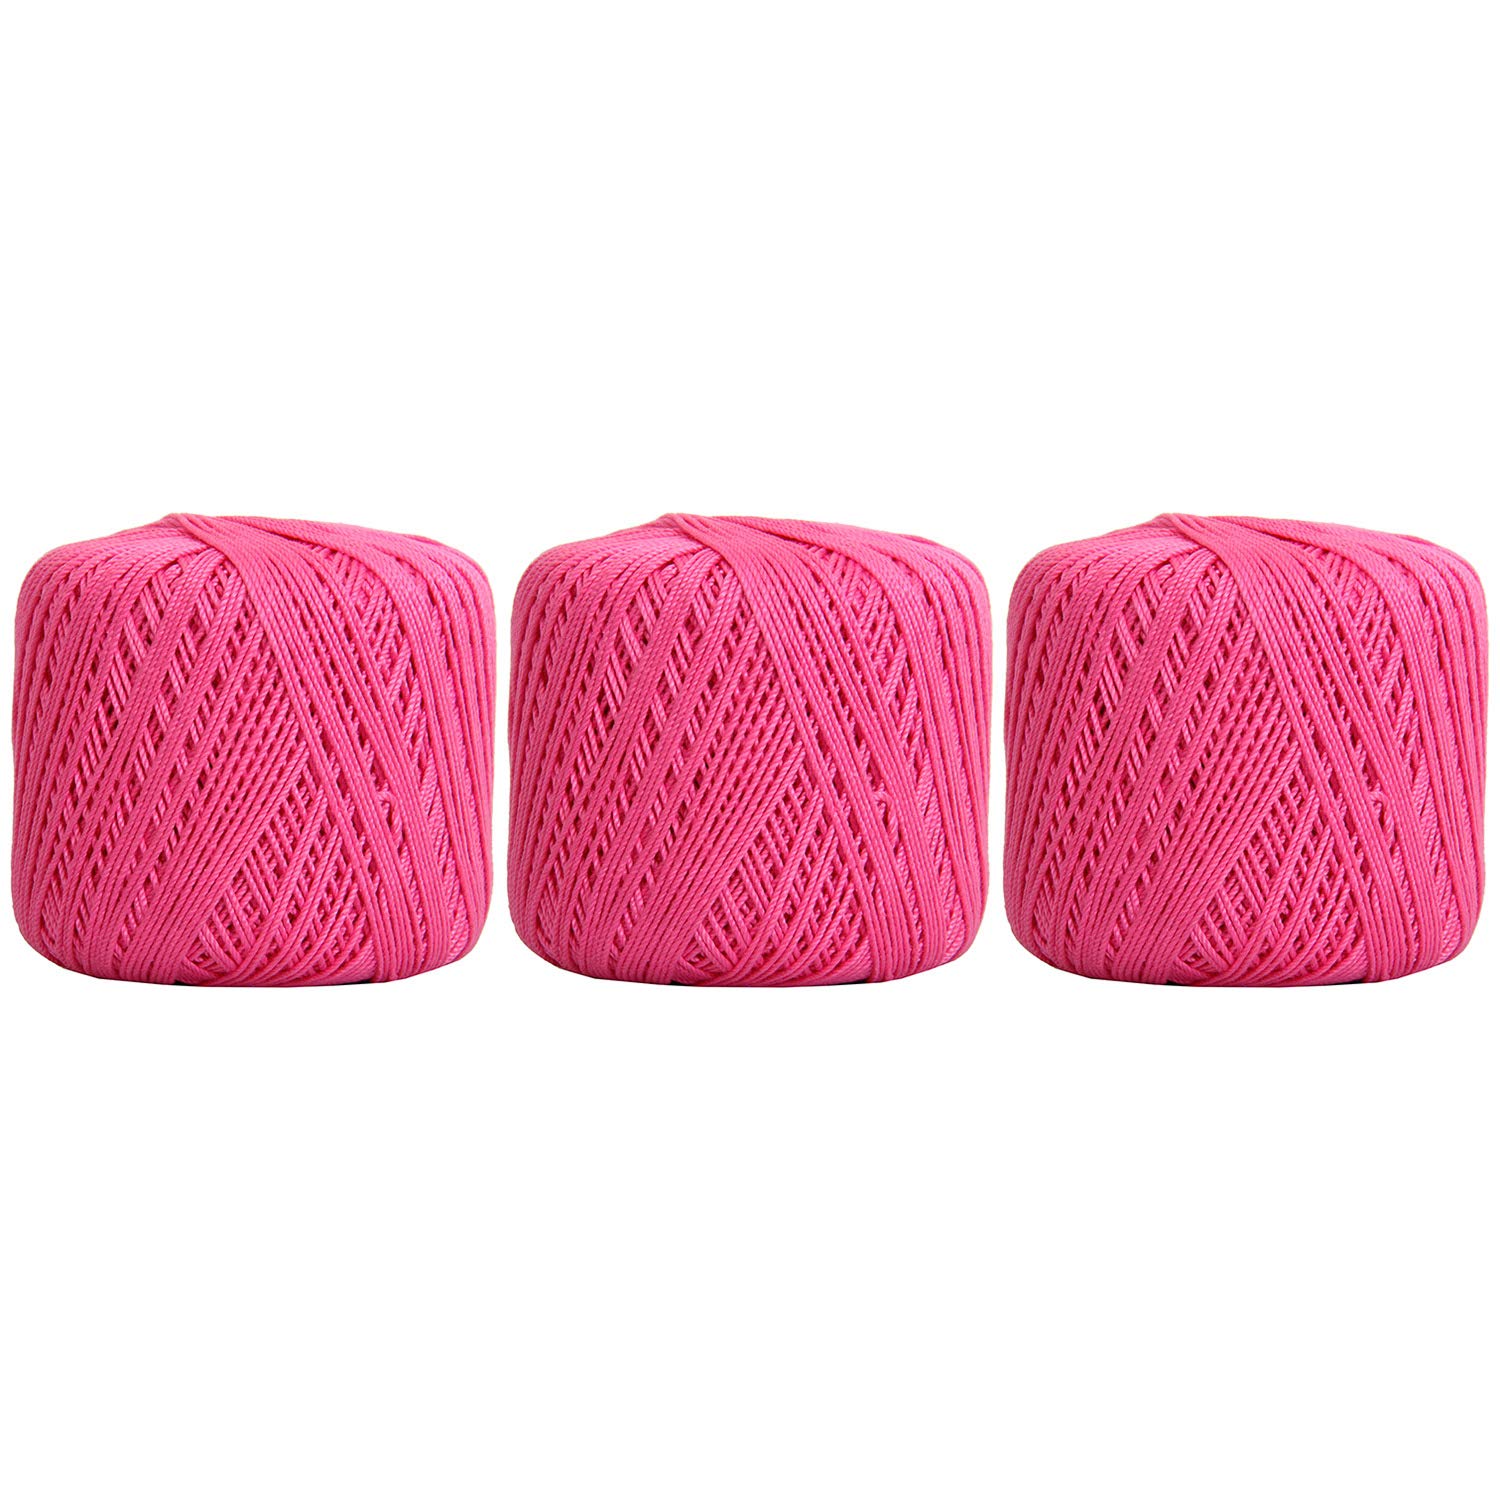 Threadart 3 Ball Pack Threadart 100 Pure Cotton Crochet Thread - Size 3 - Color 35 - Hot Pink - Size 10 And 3 - Singles And Bulk Packs Ava